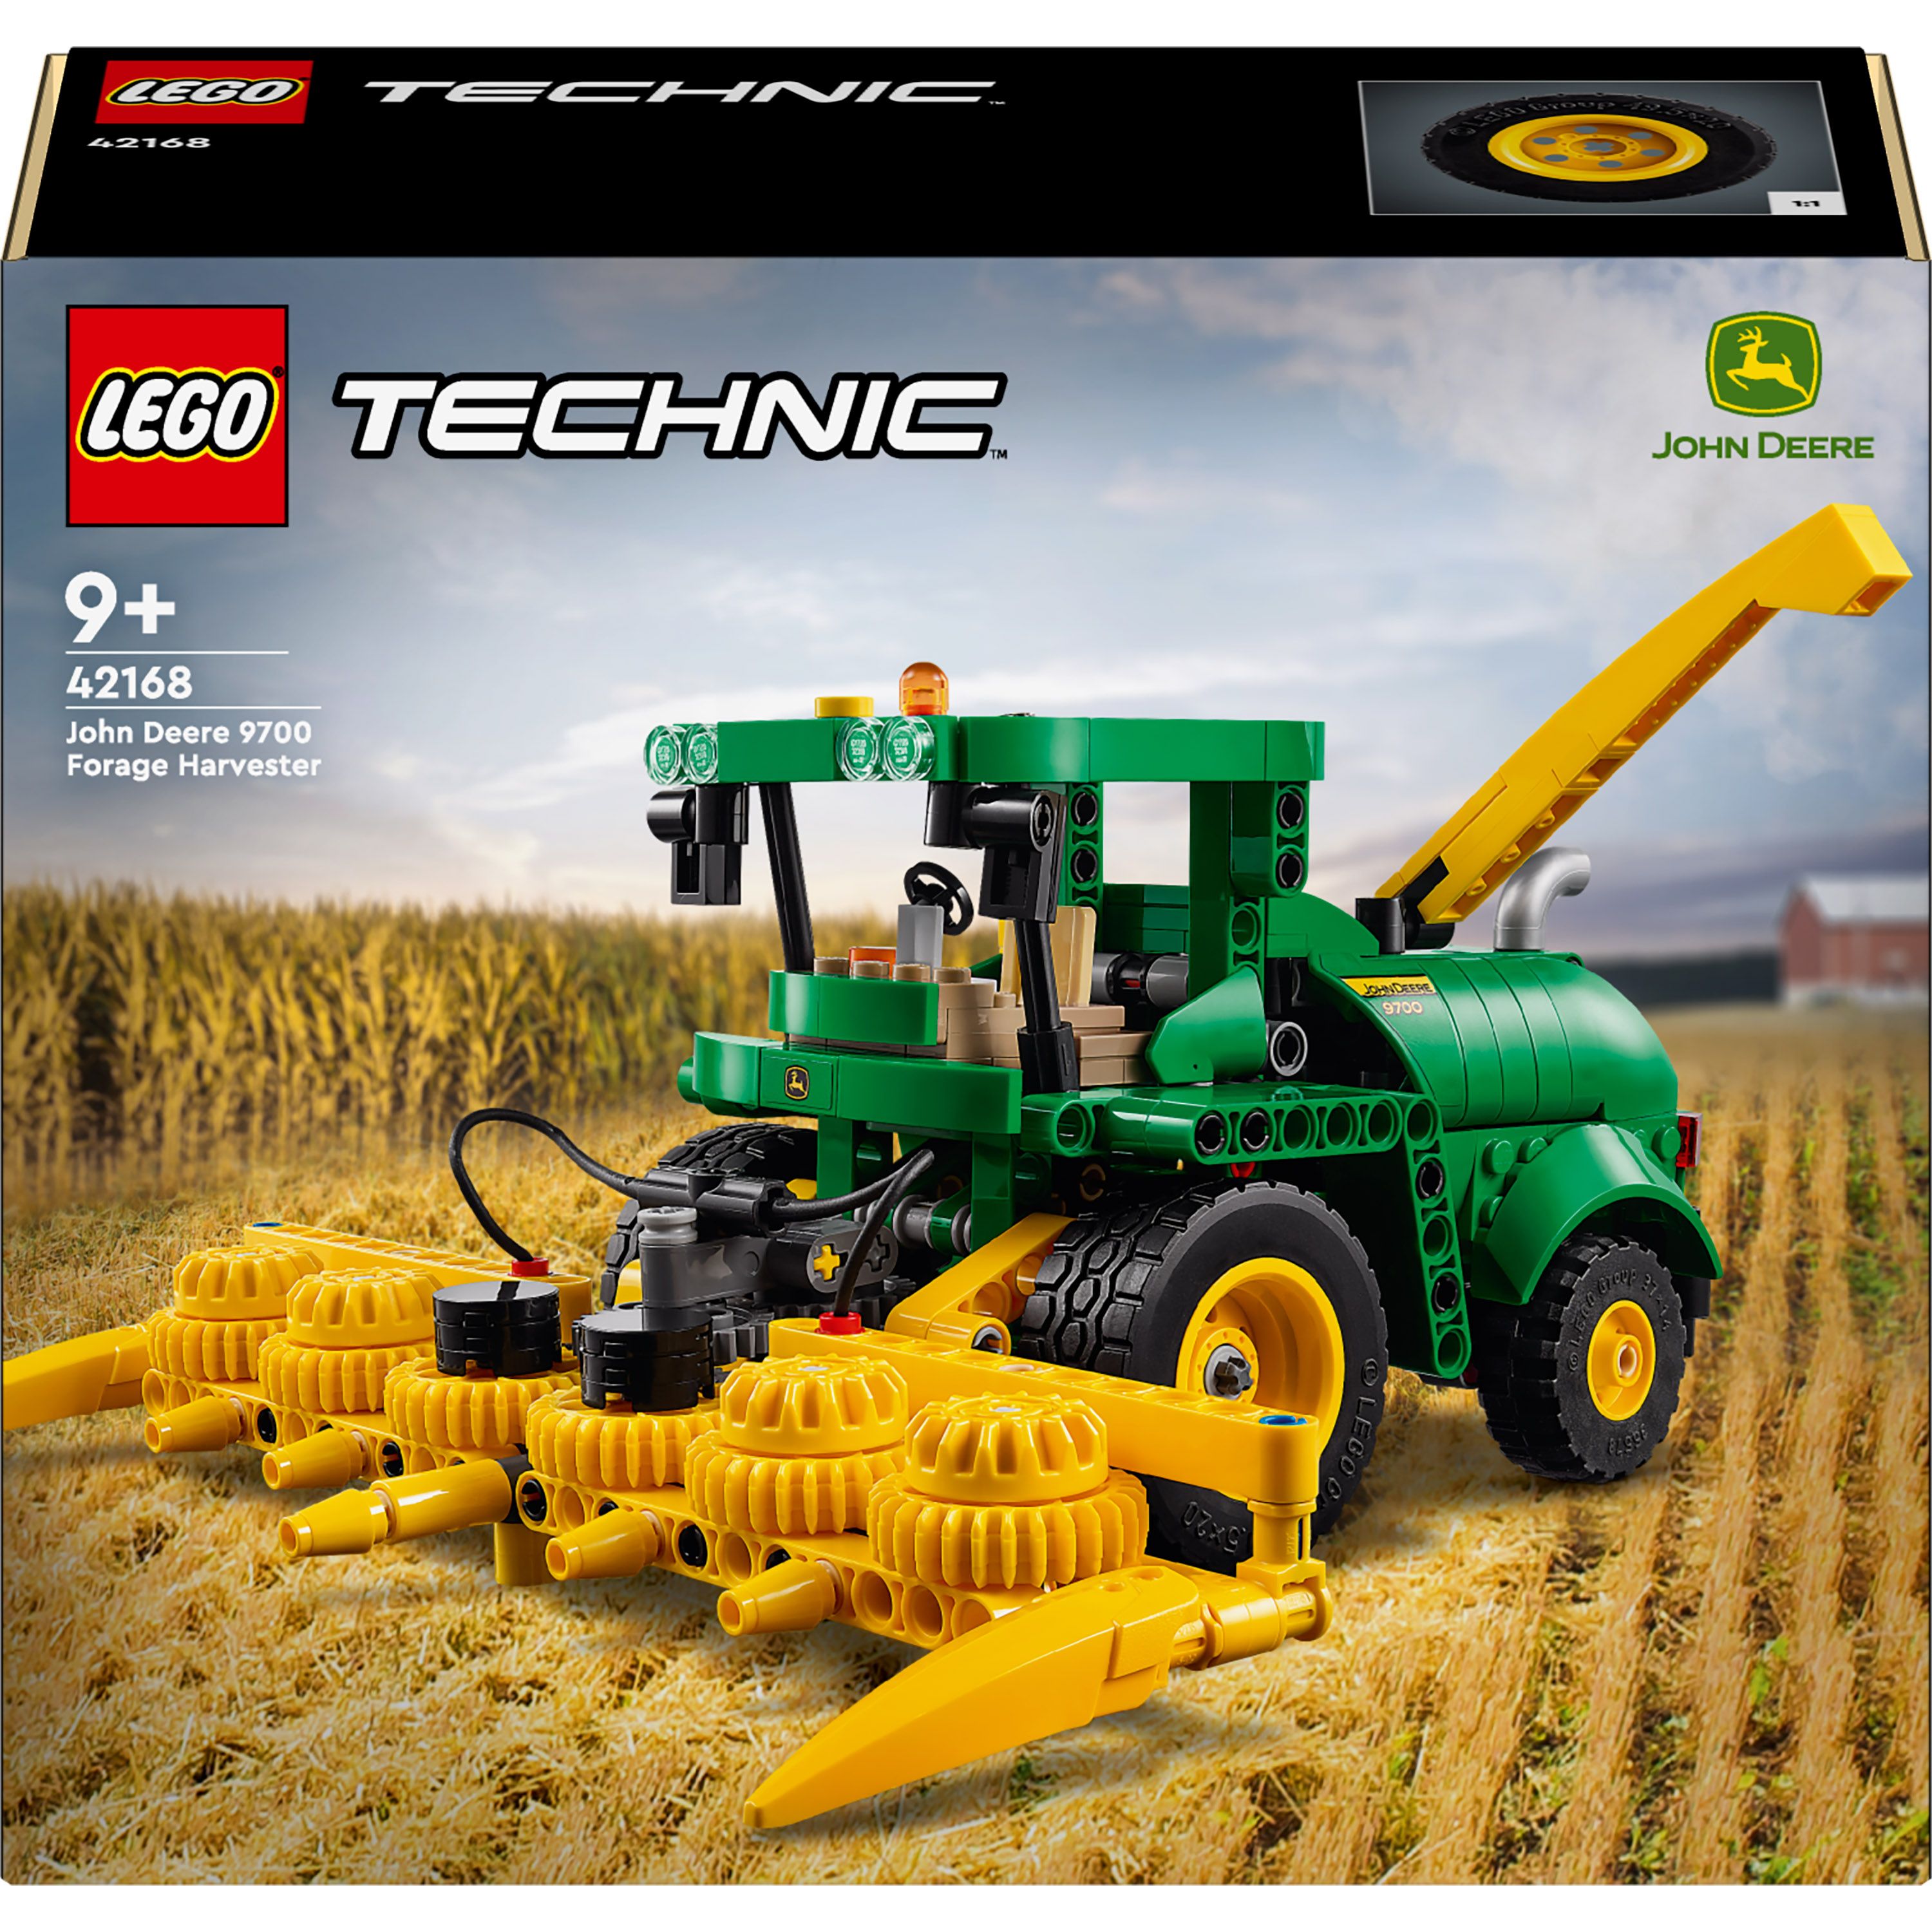 Конструктор LEGO Technic Кормоуборочный комбайн John Deere 9700 559 детали (42168) - фото 1